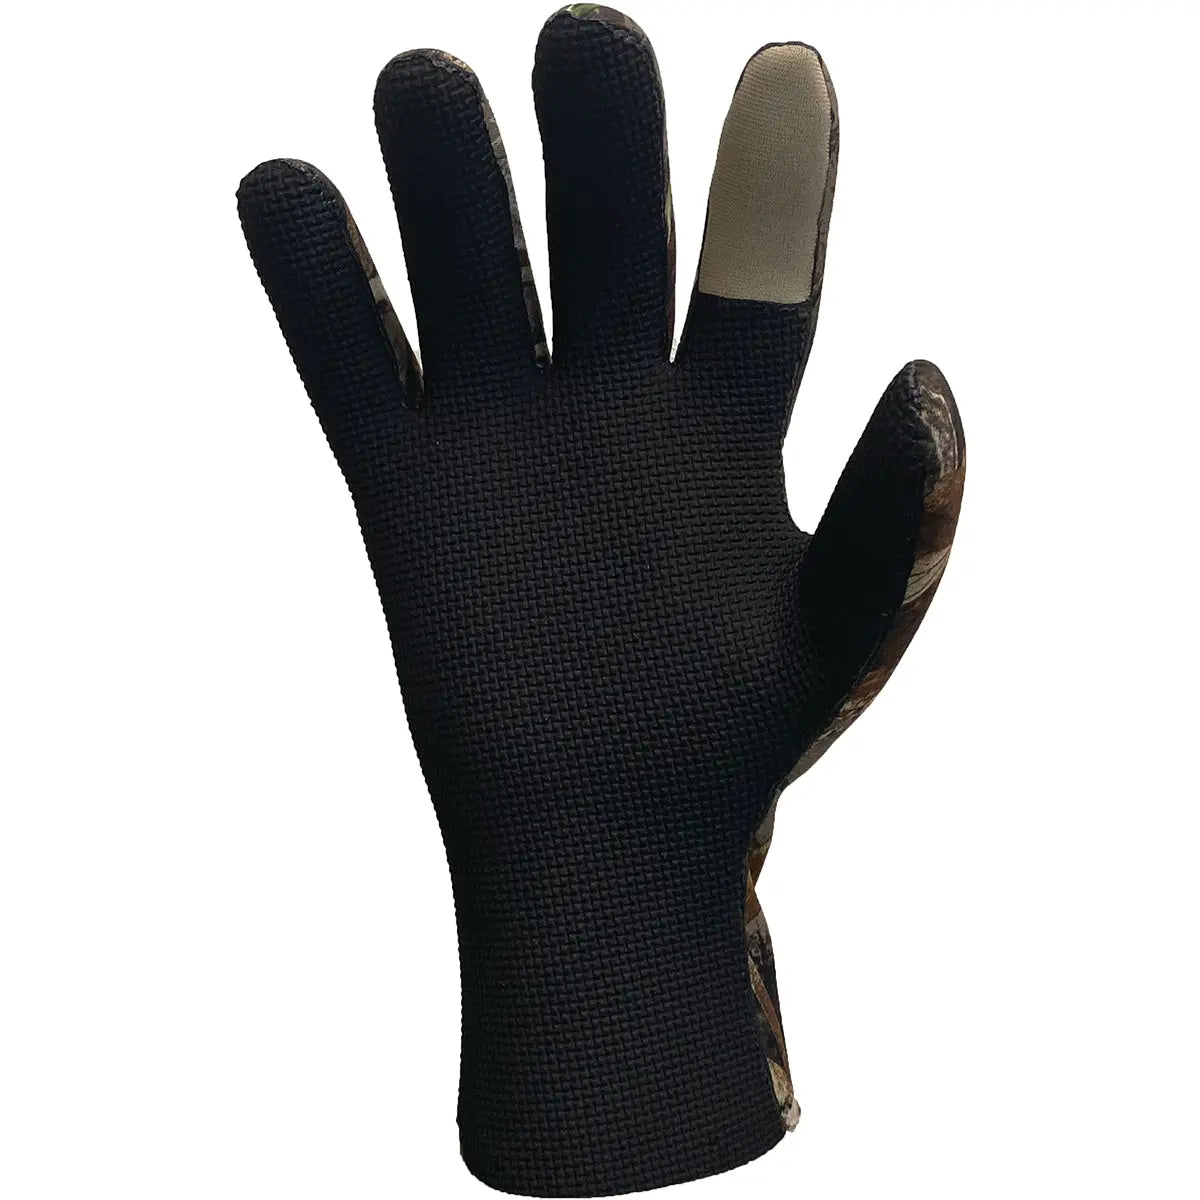 Glacier Glove Pro Waterfowler Waterproof Neoprene Gloves, Max 5